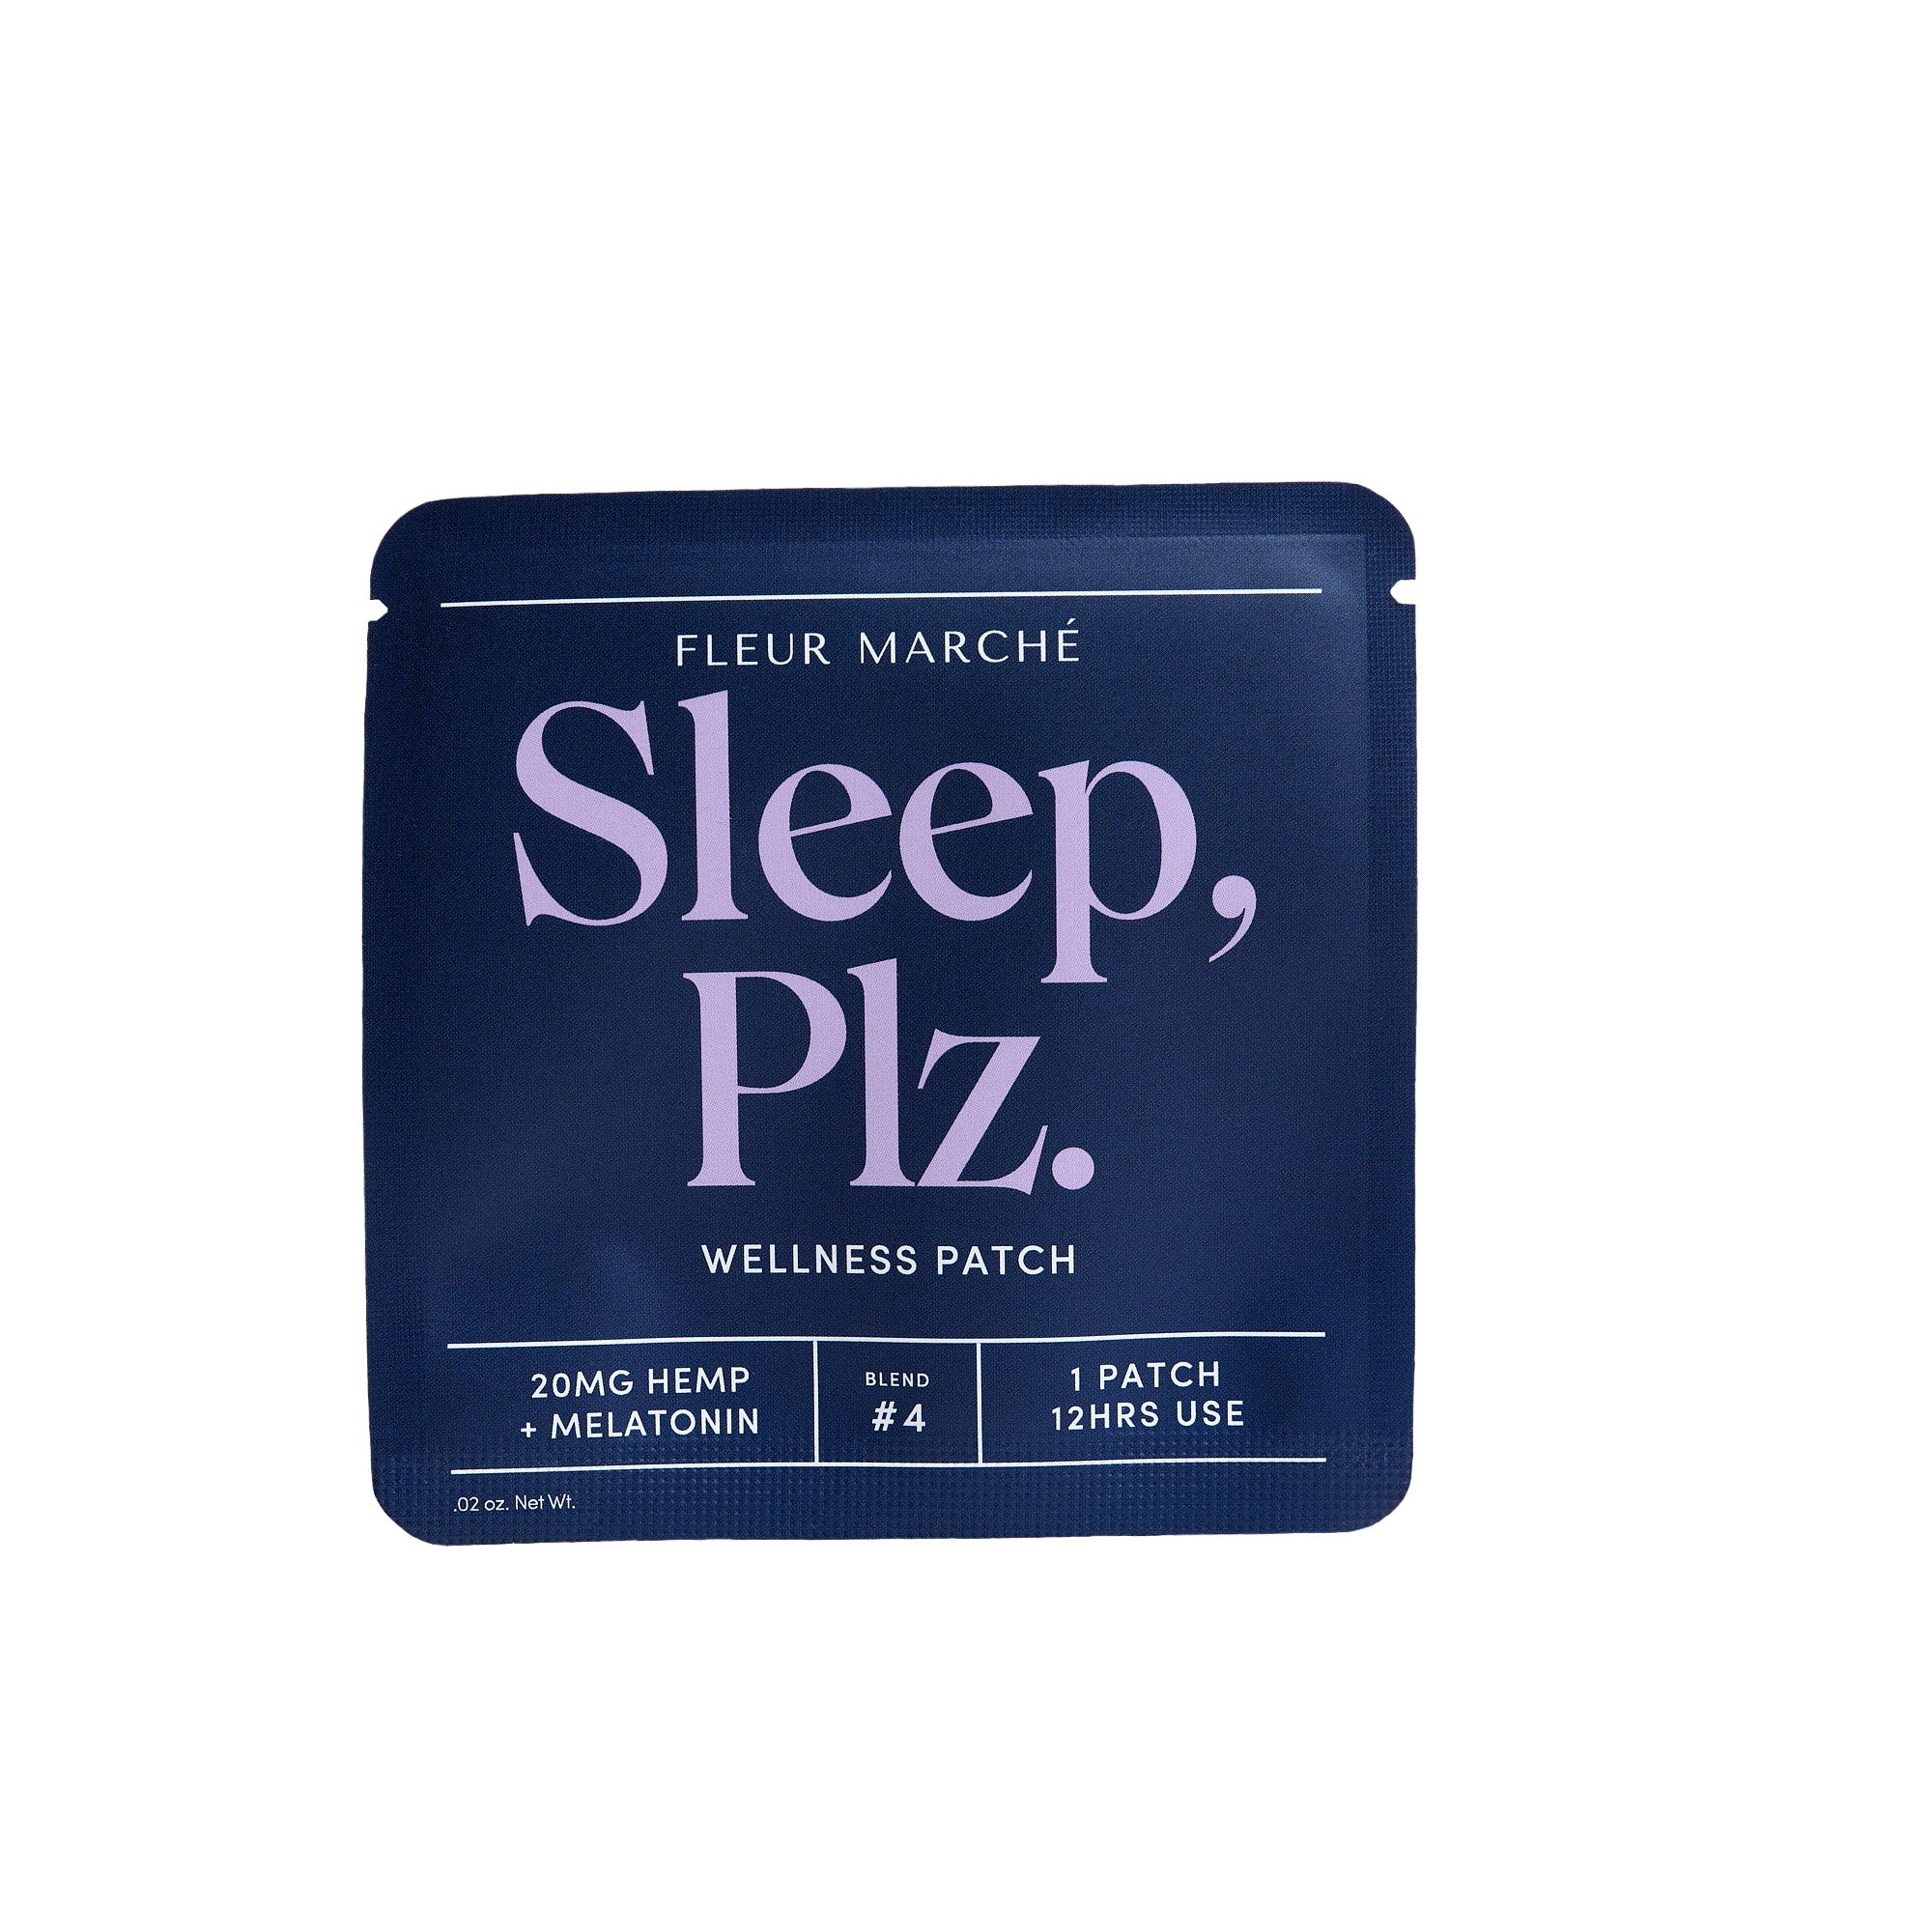 Sleep Plz. patch